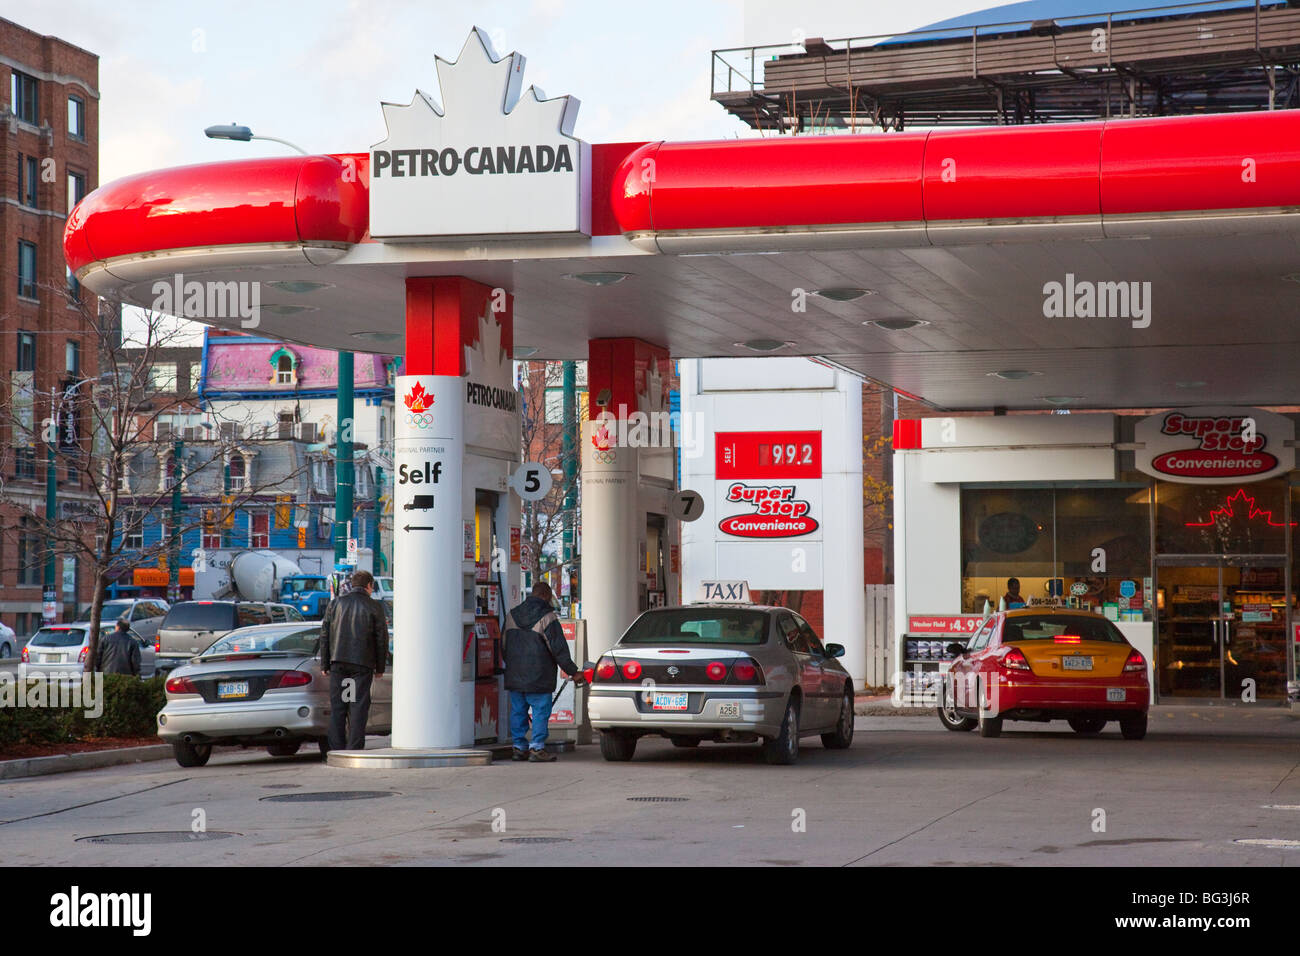 Petro-Canada-Tankstelle und Super Stop Convenience-Store in Toronto Kanada Stockfoto